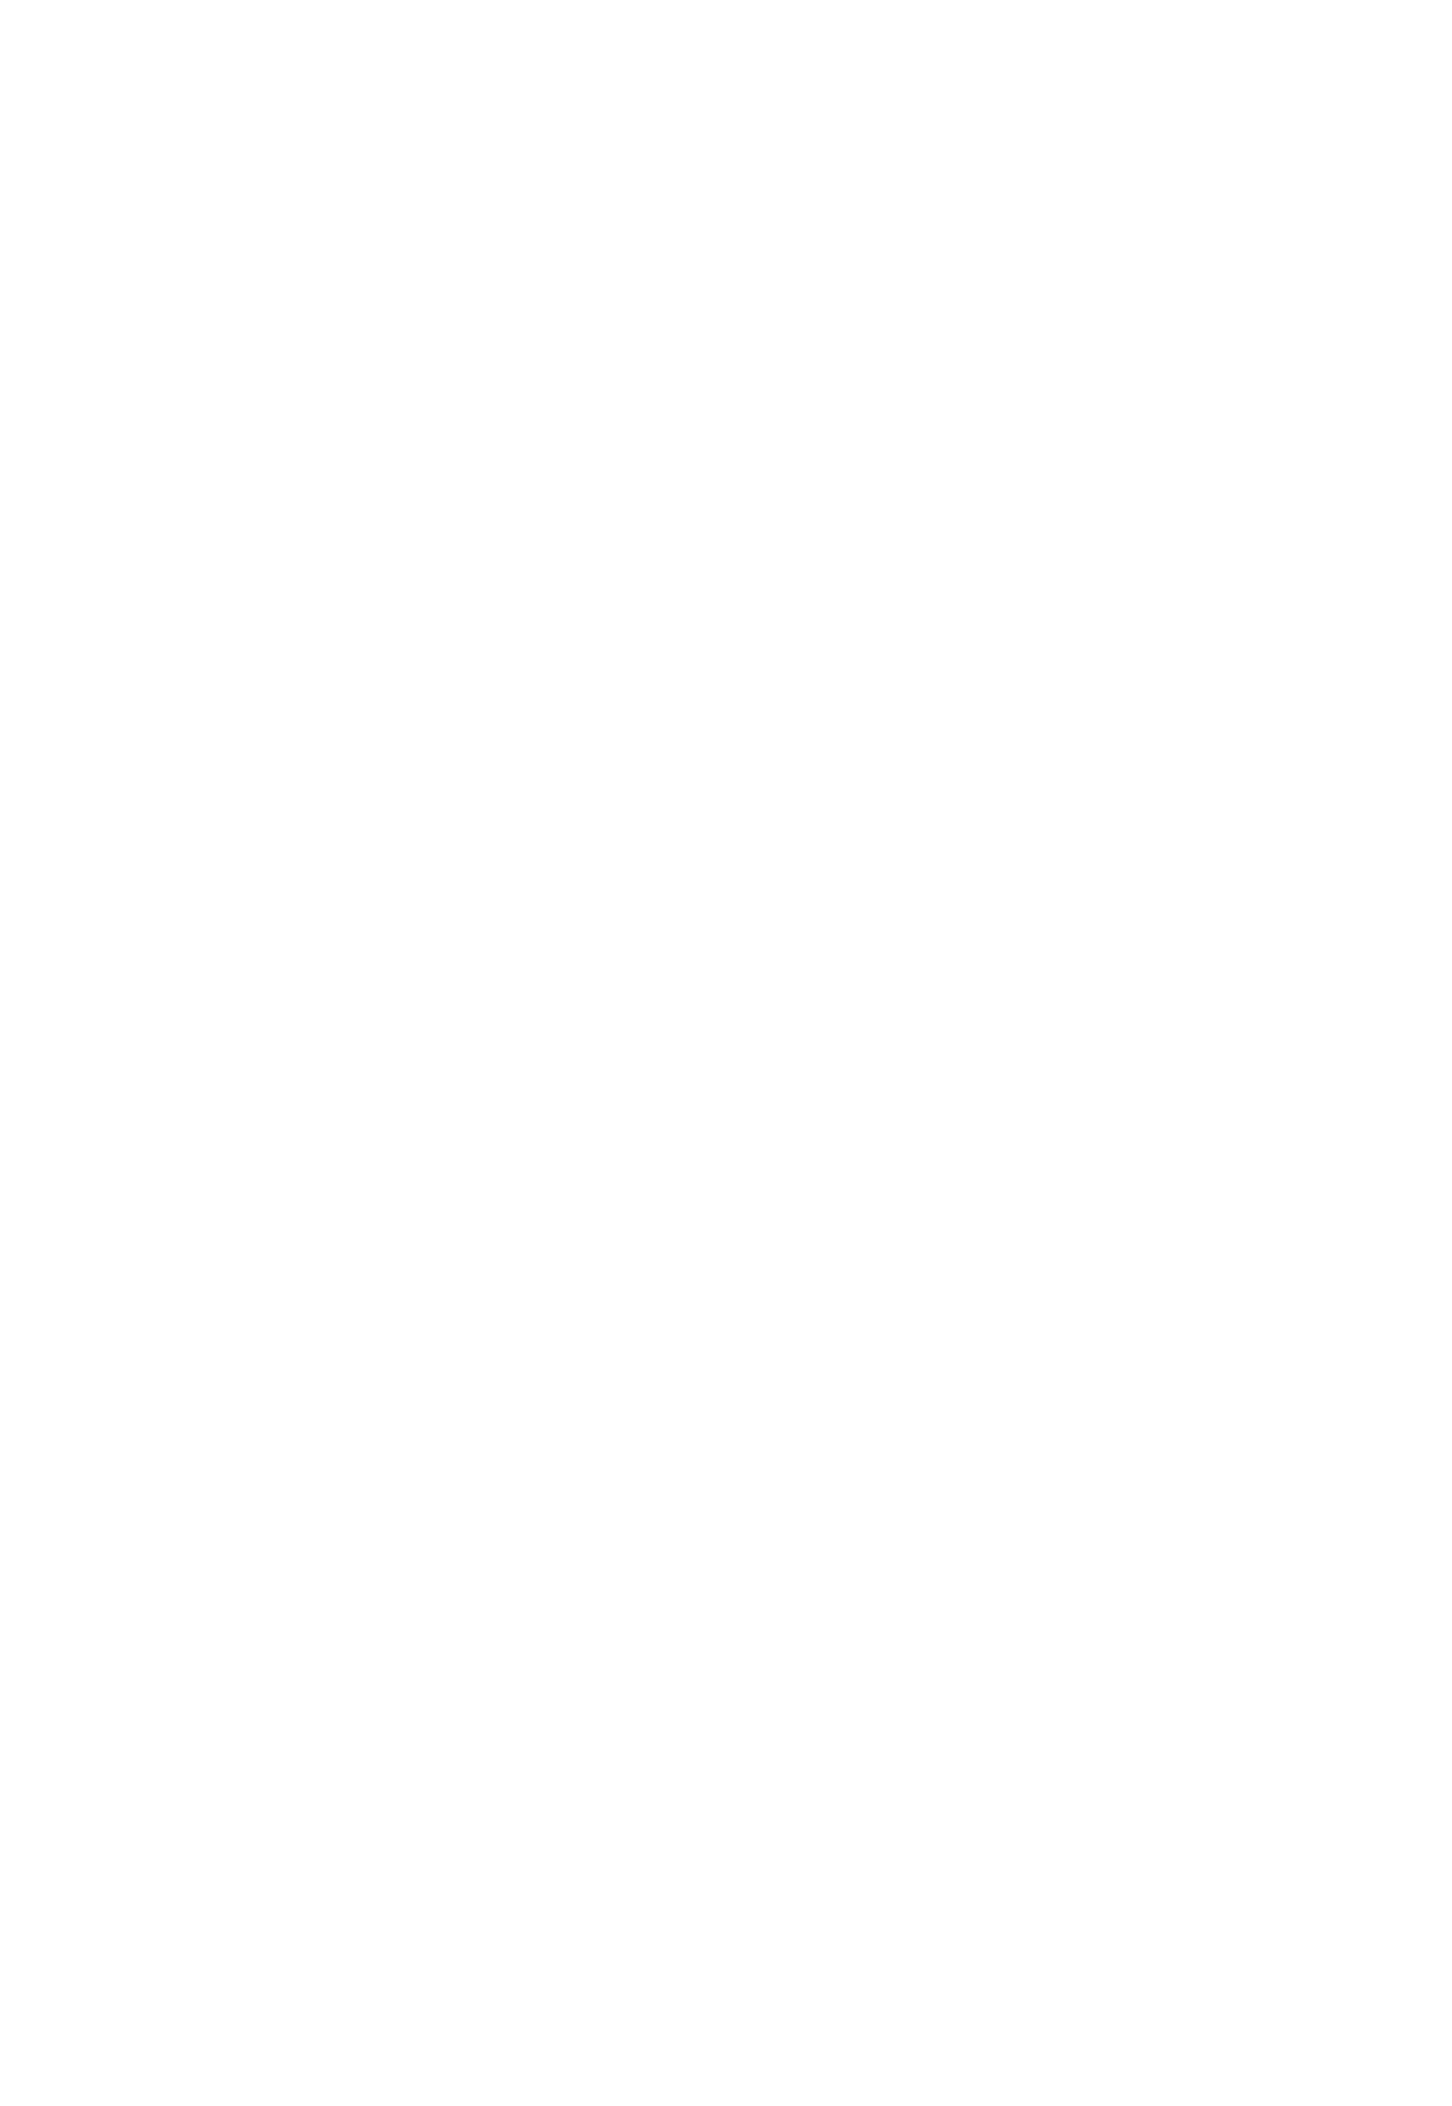 Logo Björn Becker in Weiß - 2 B in transparentem Abstand